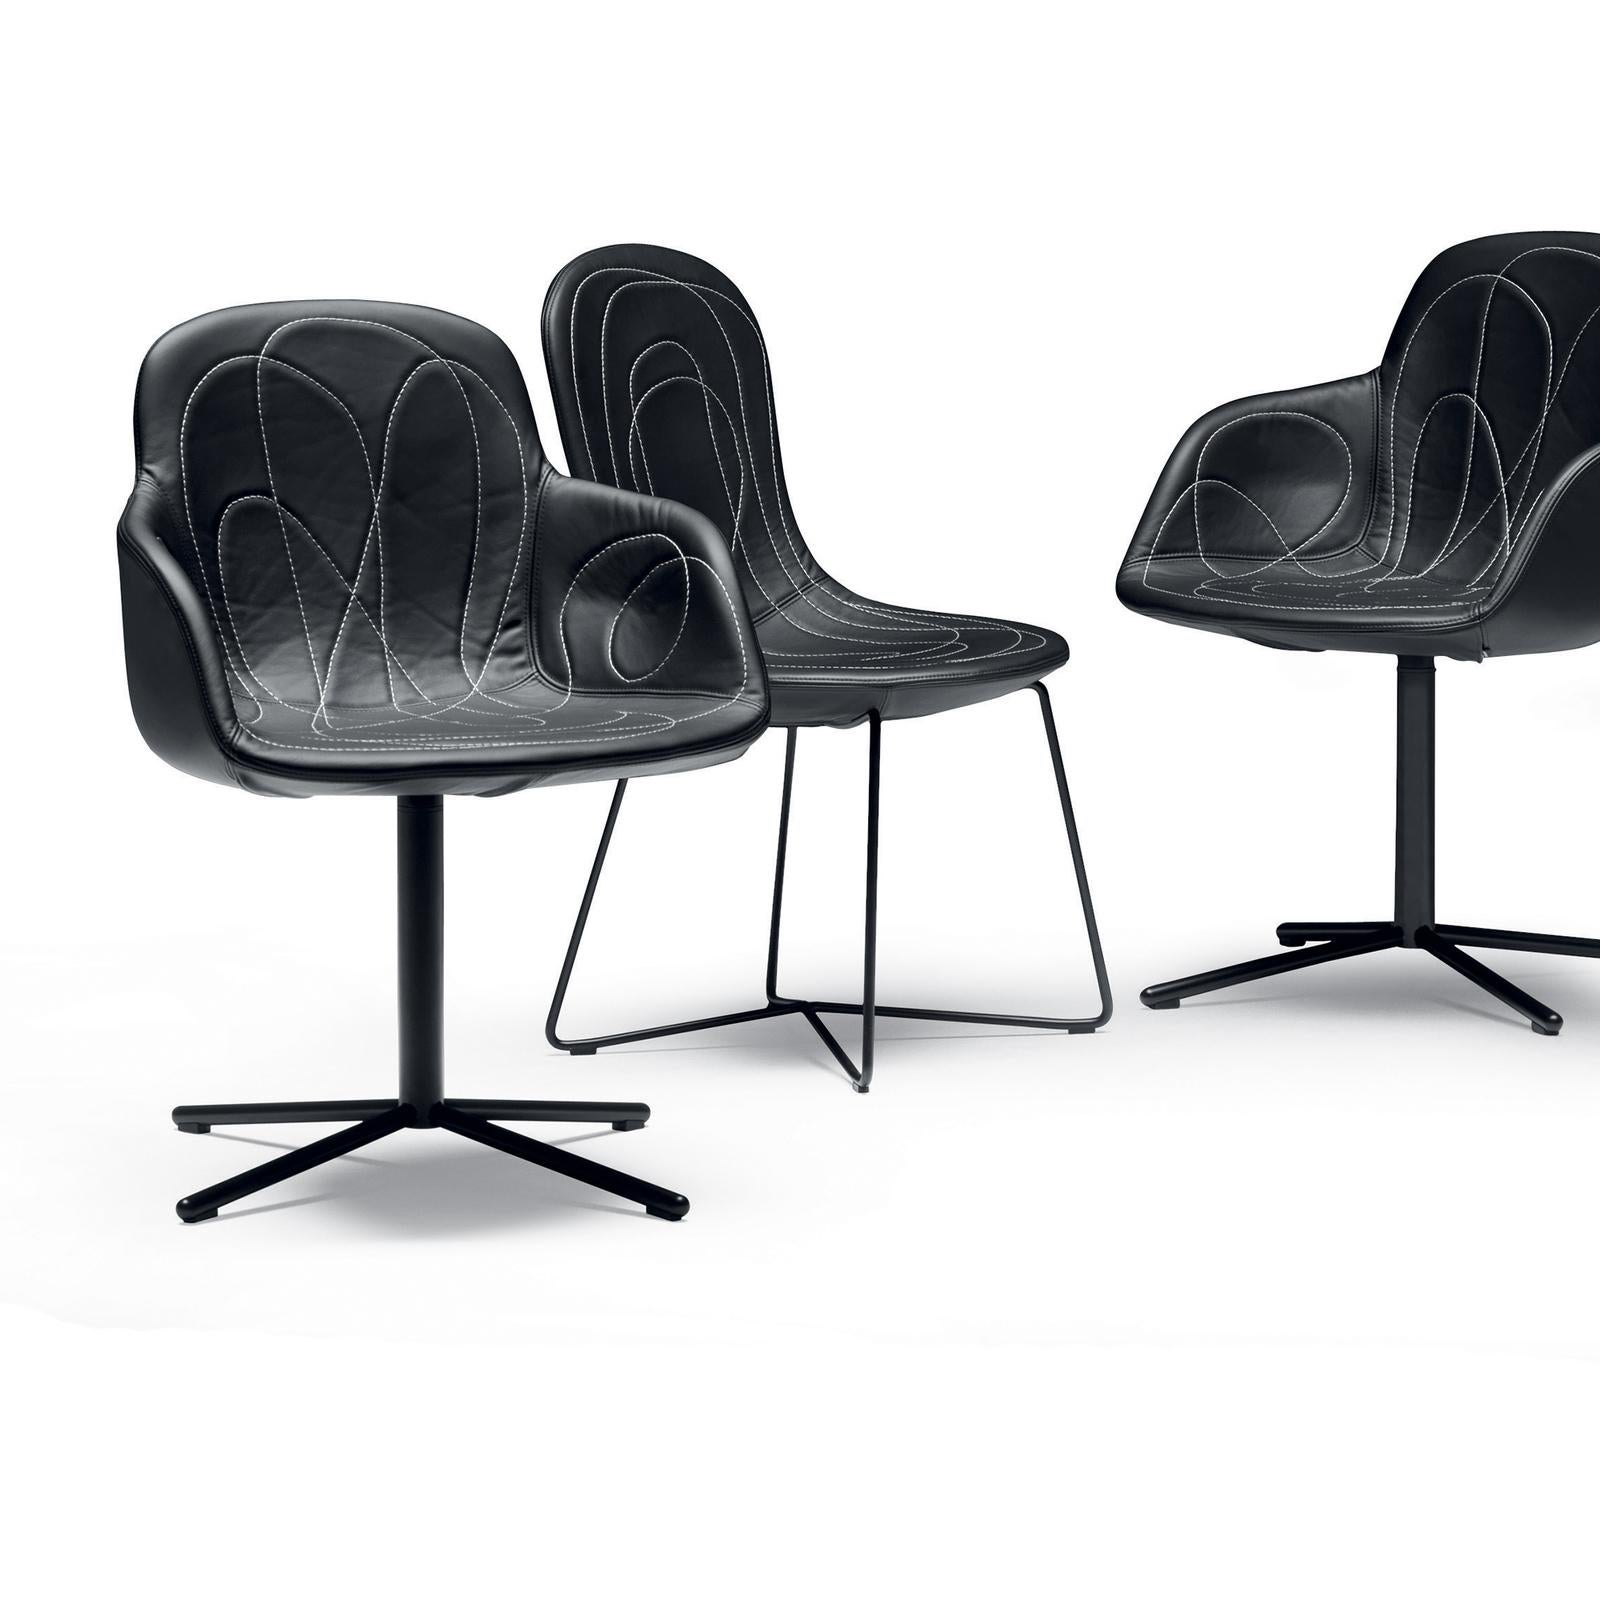 Customizable New Tacchini Doodle Chair Designed by Claesson Koivisto Rune 3